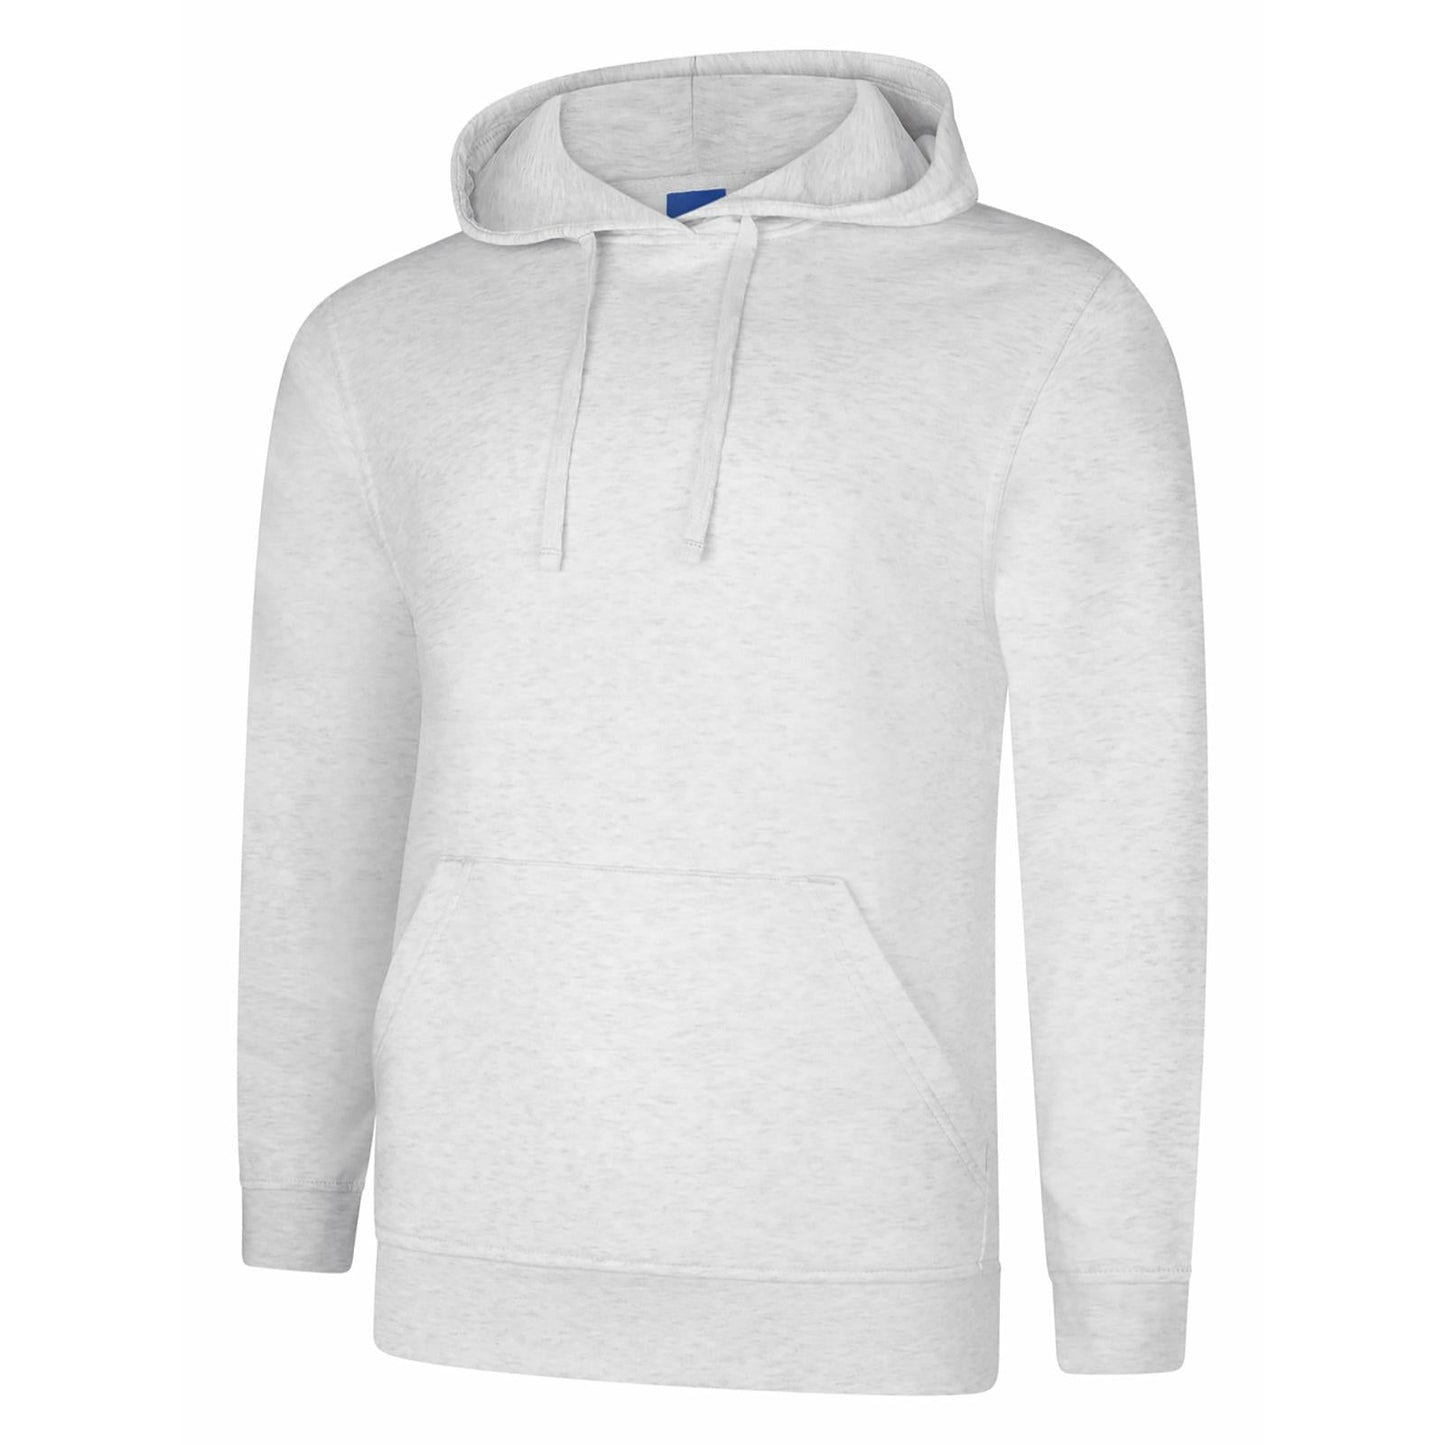 Deluxe Hooded Sweatshirt (L - 2XL) Ash Grey